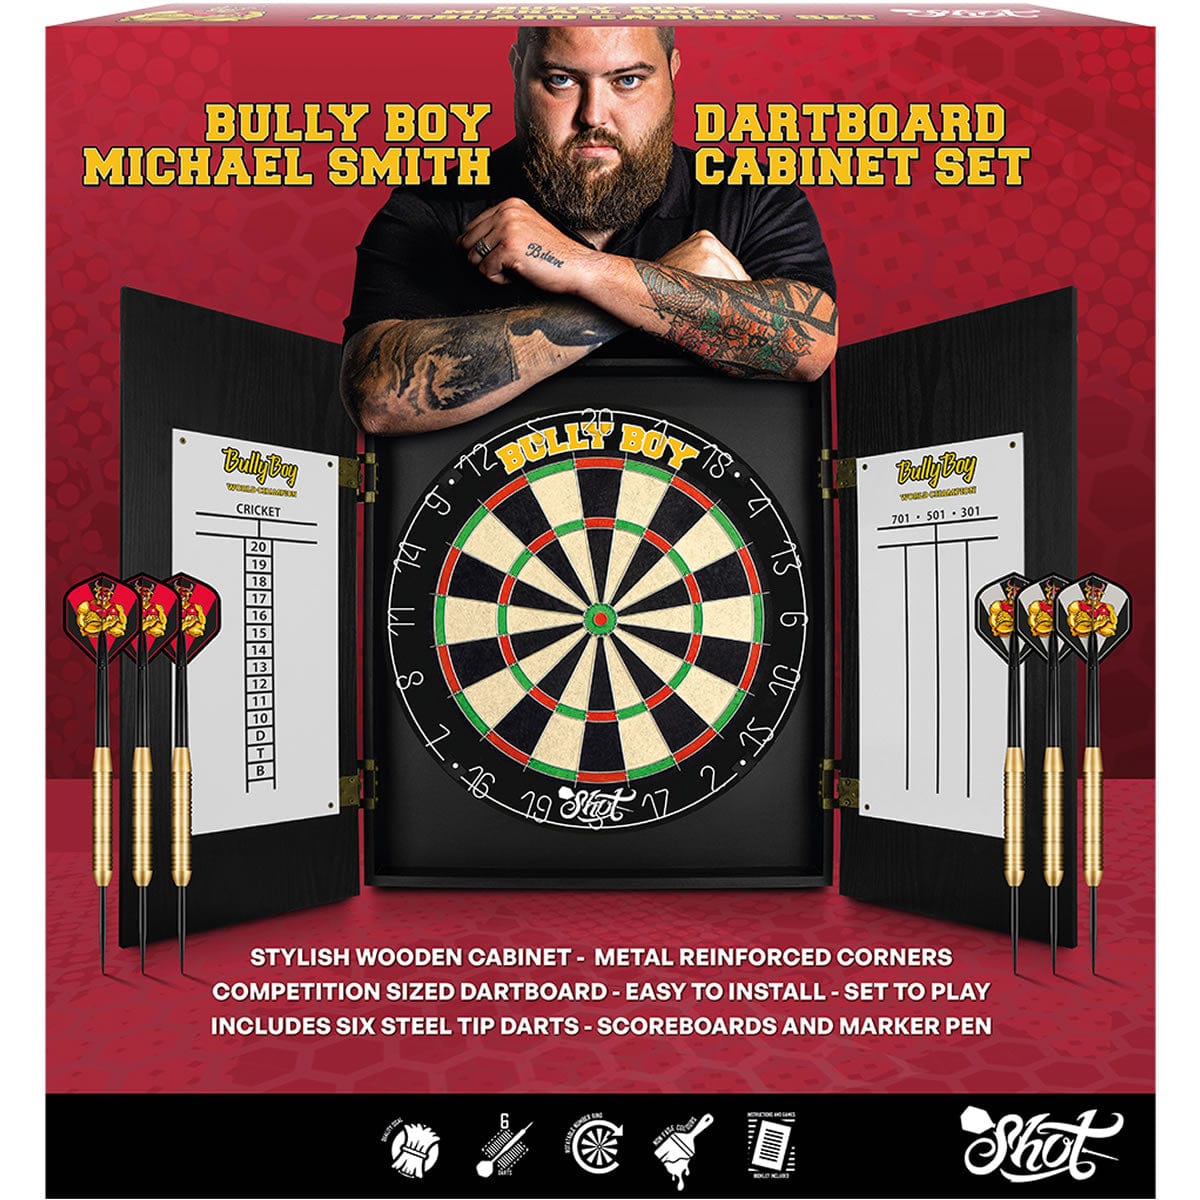 Shot Michael Smith Dartboard Cabinet Set - inc 2 Sets Darts - Bully Boy